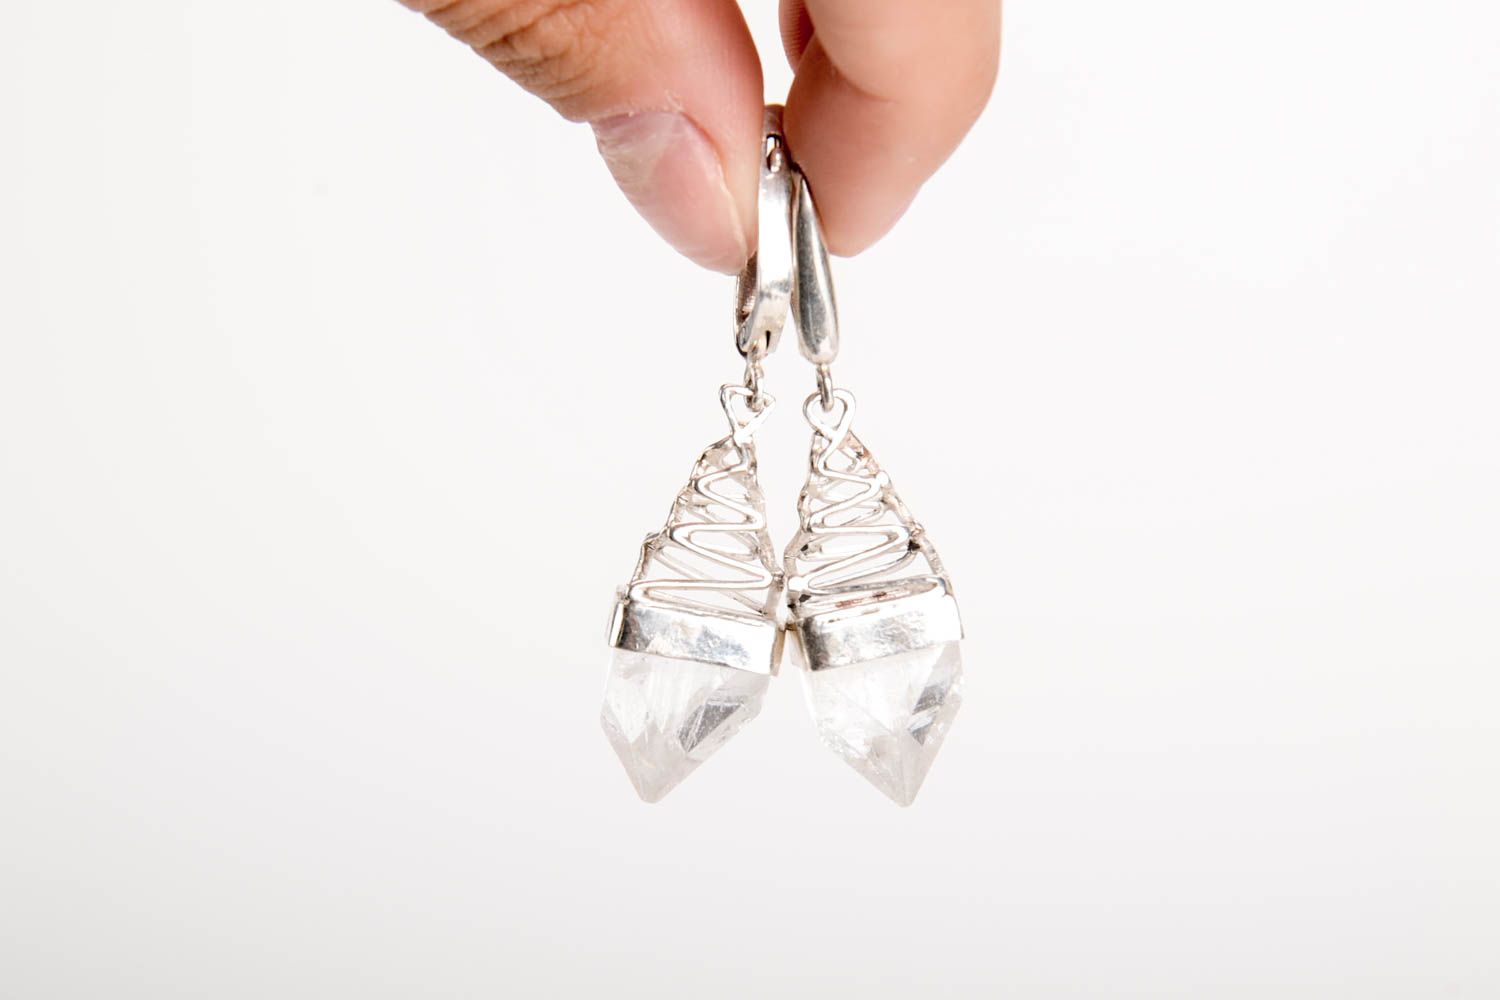 Handmade silver earrings unusual accessories silver jewelry for women gift ideas photo 5